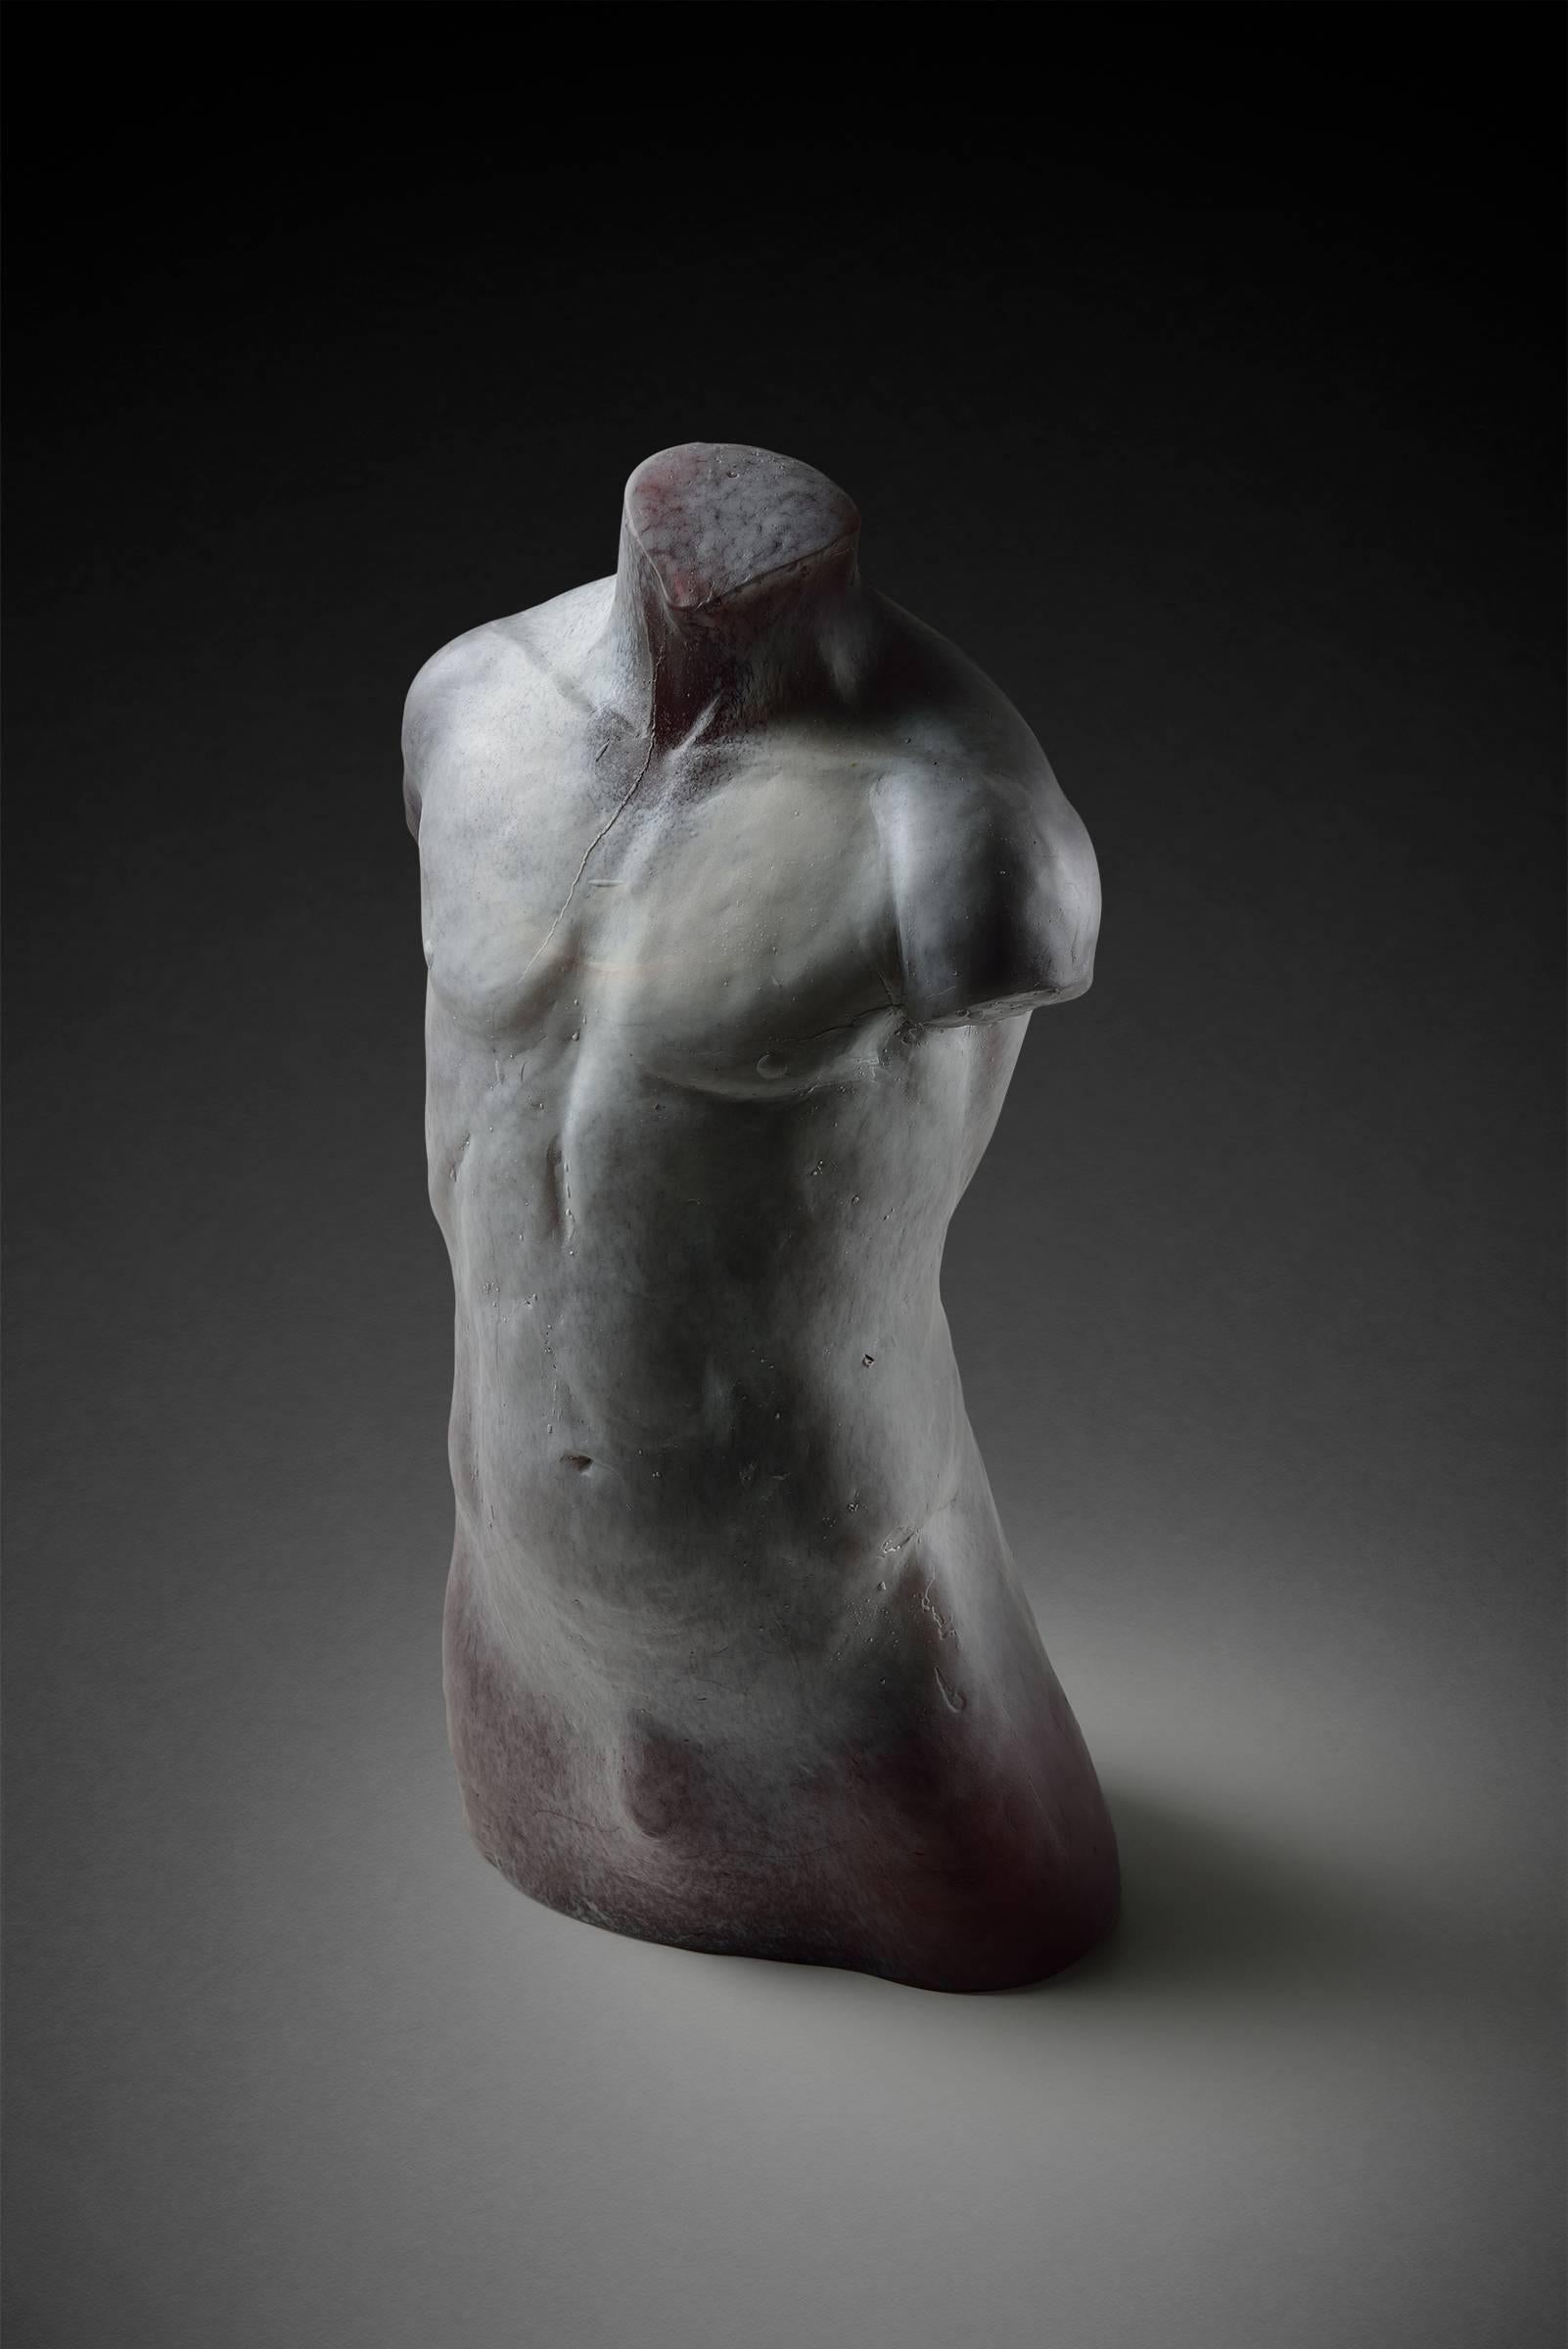 Ross Richmond Figurative Sculpture - TORSO #1 - hand-blown, one of a kind glass sculpture of male human figure